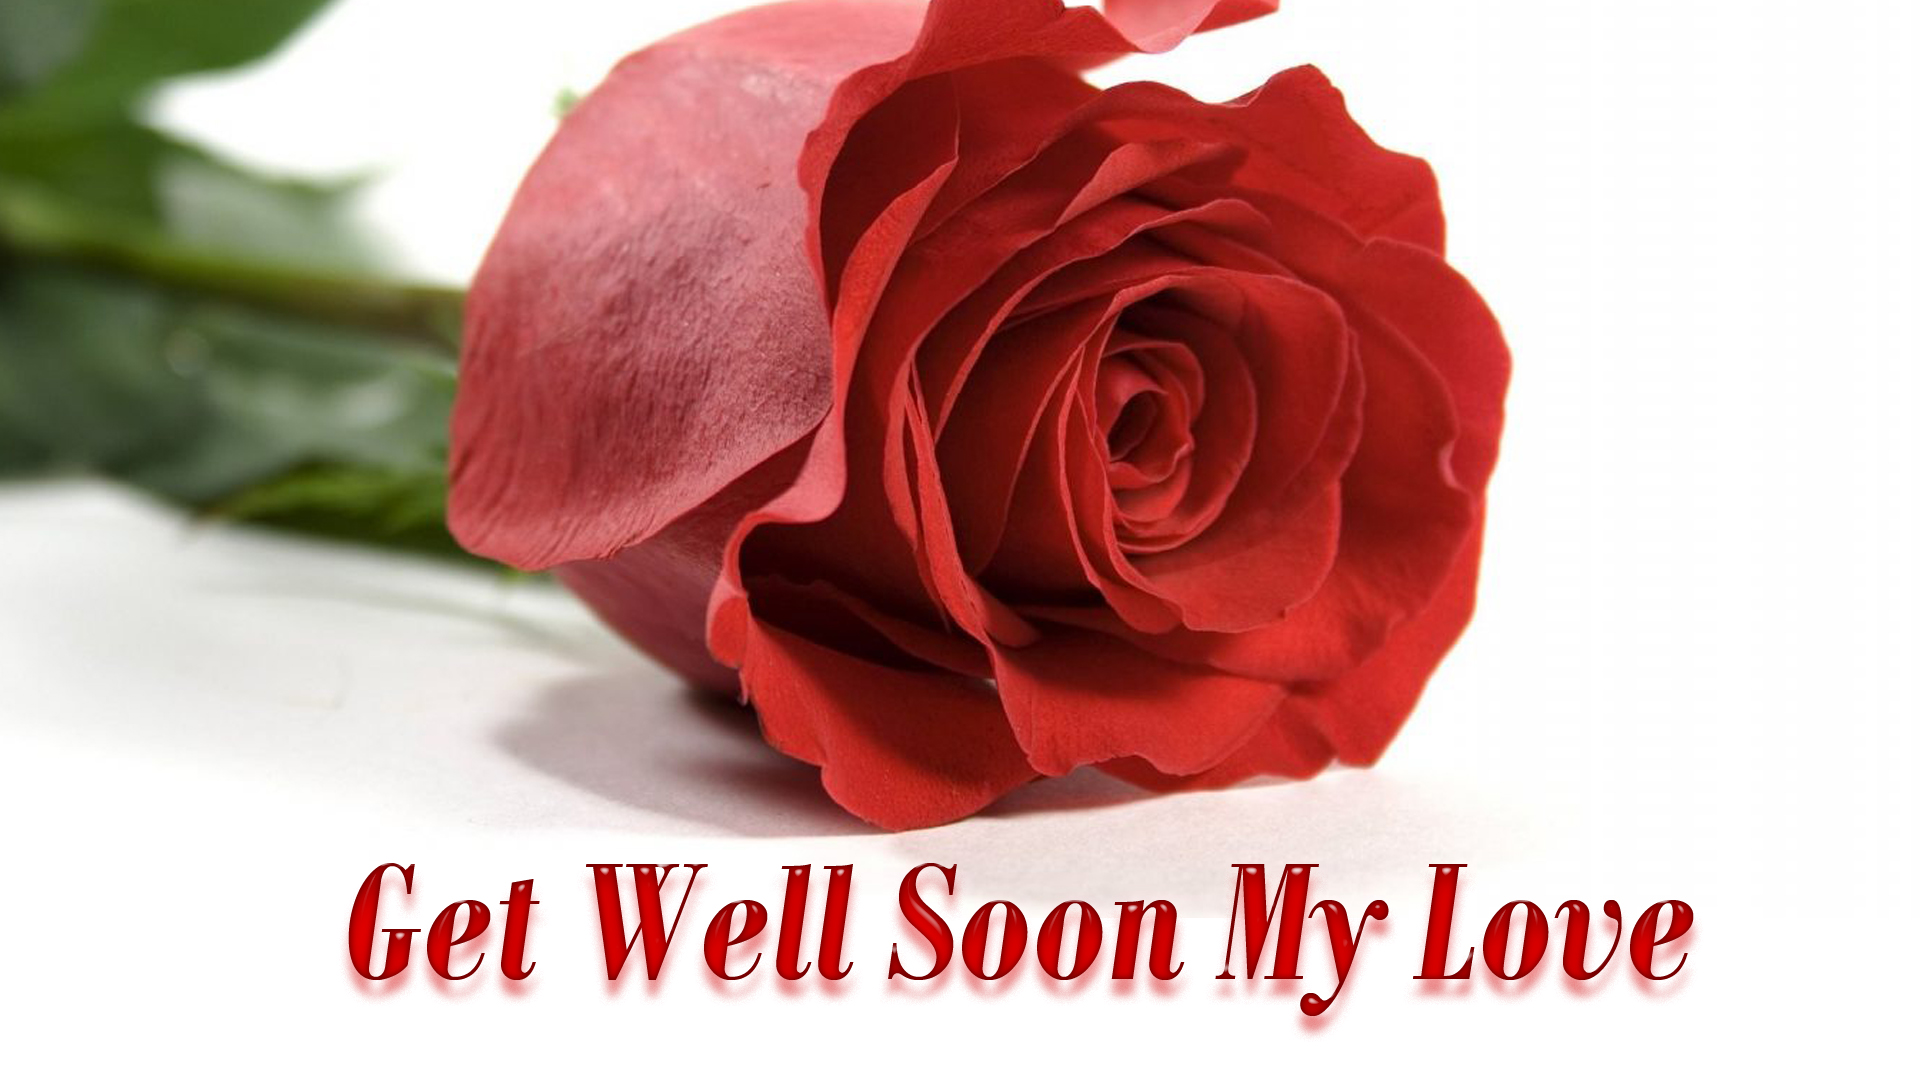 get well soon my love image